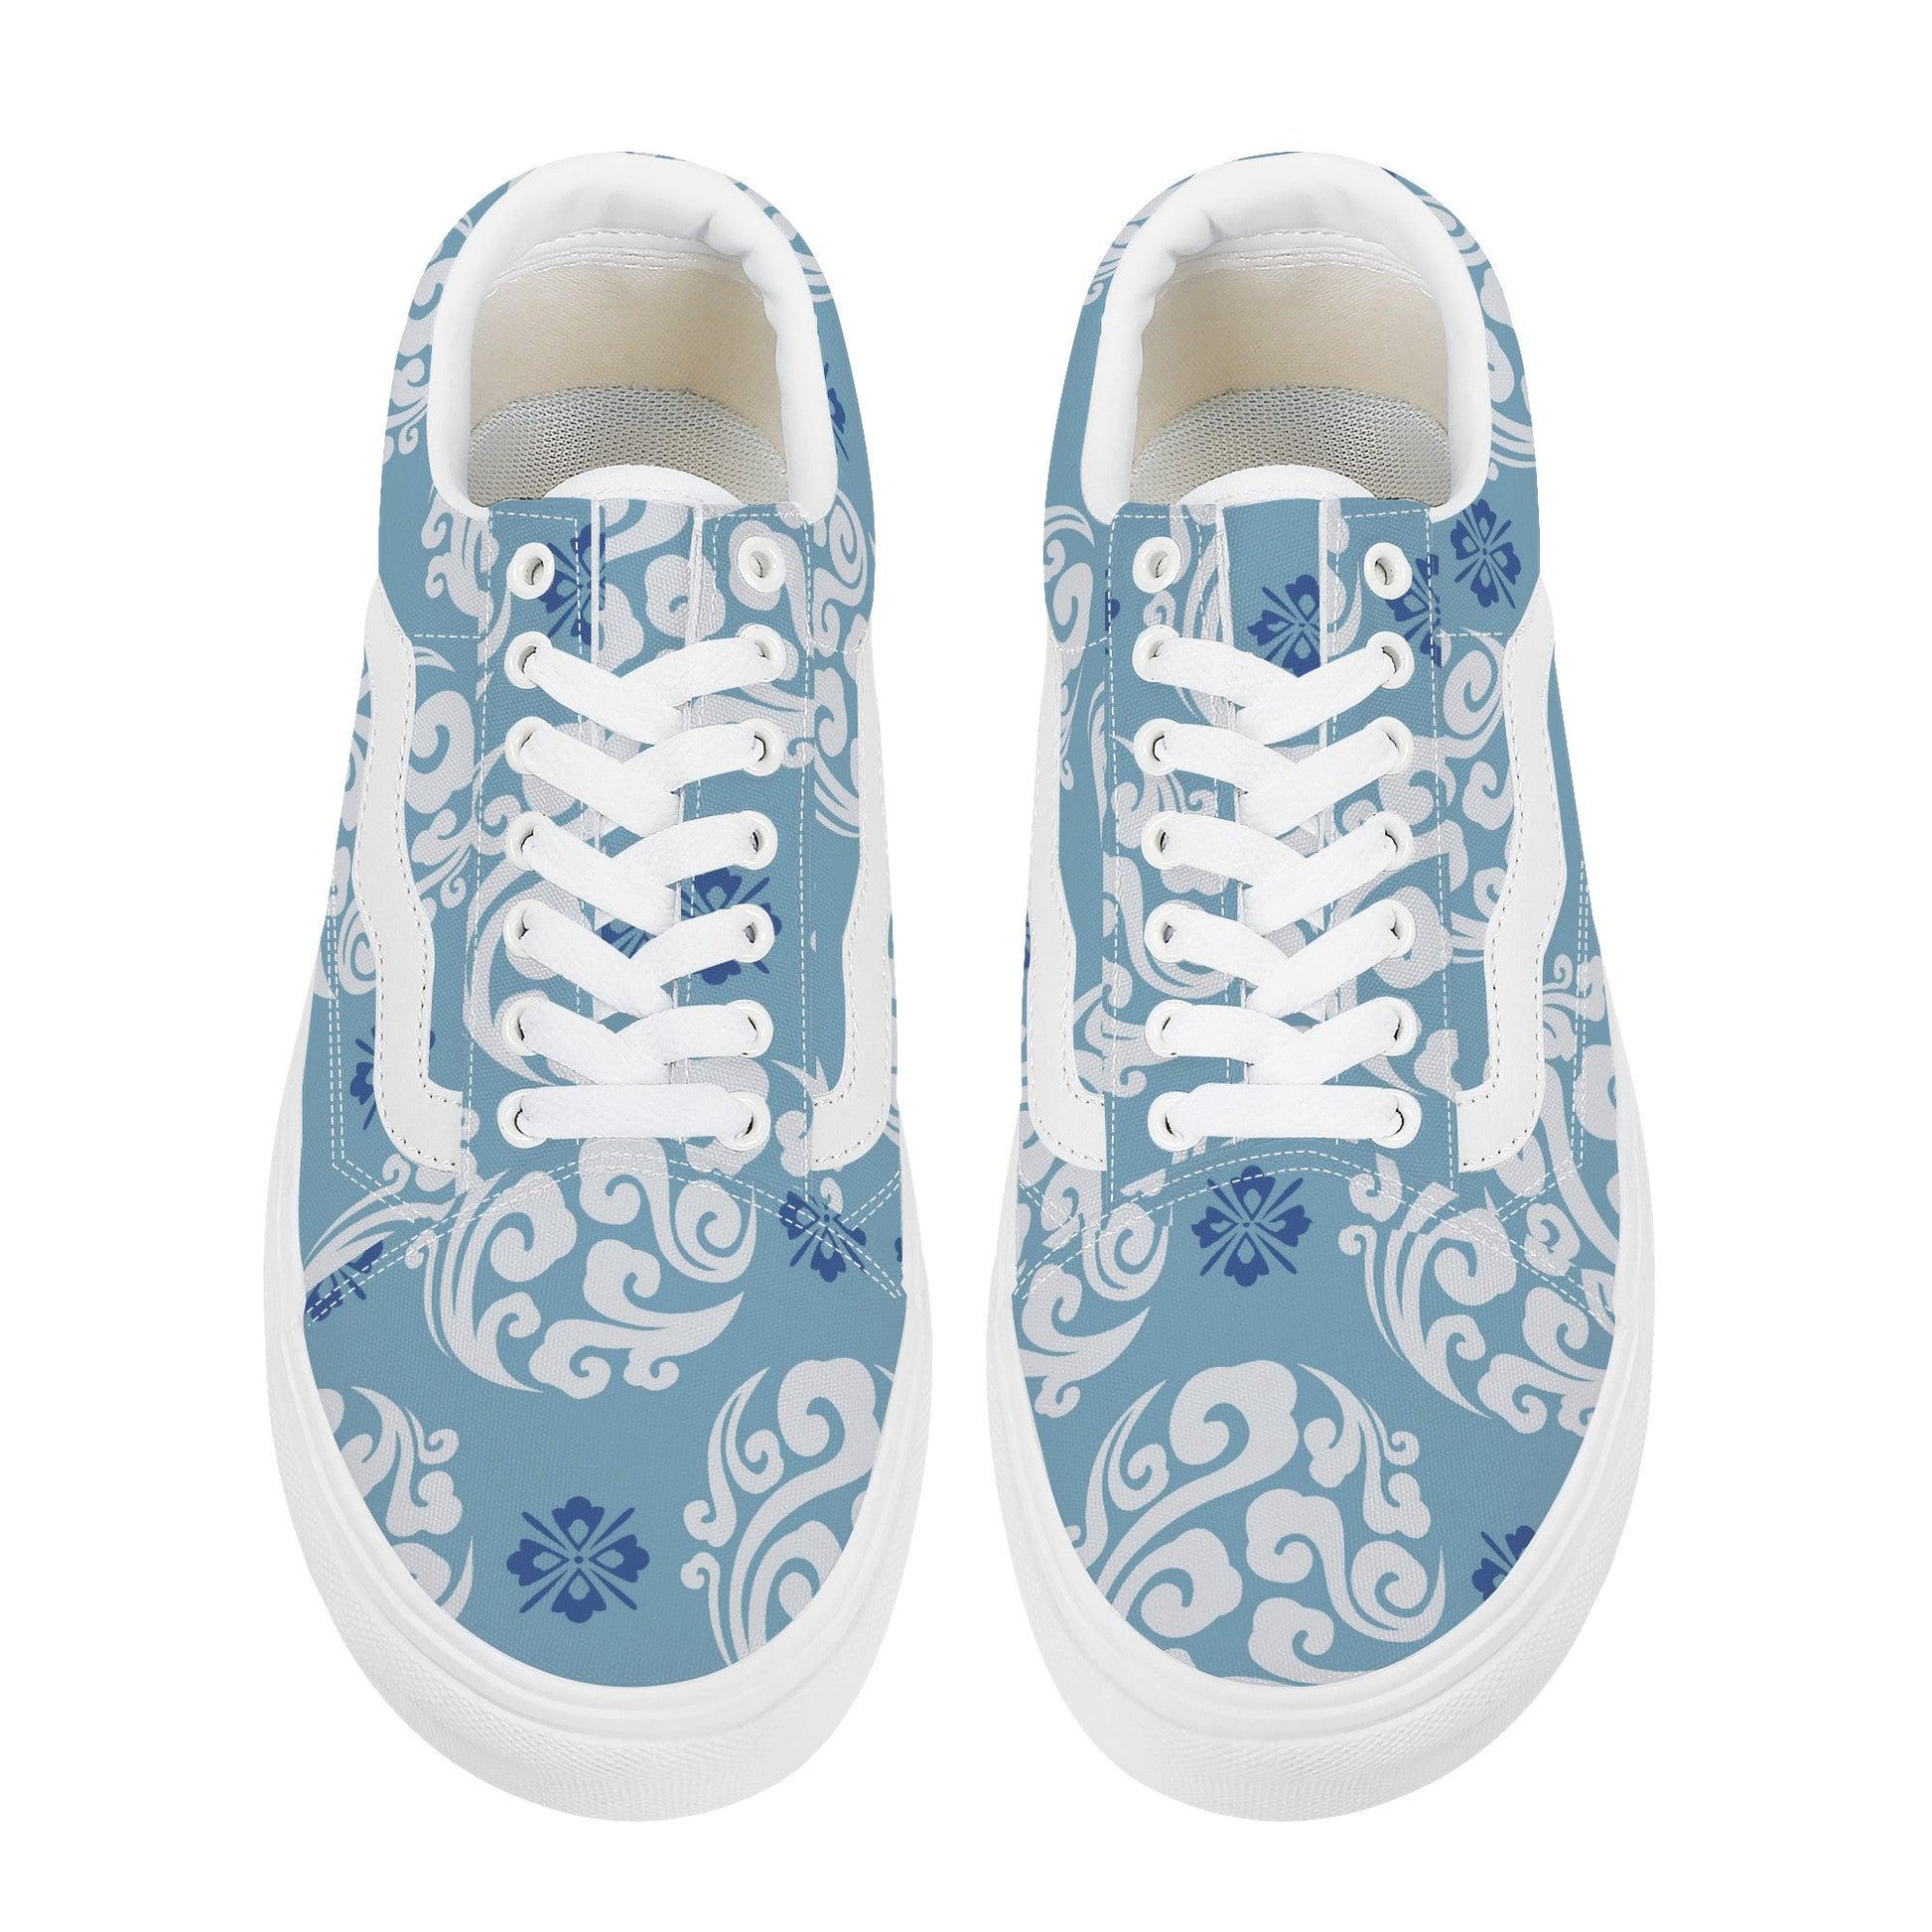 Ao 青 - Blue Low Top Flat Sneaker - Kaito Japan Design 